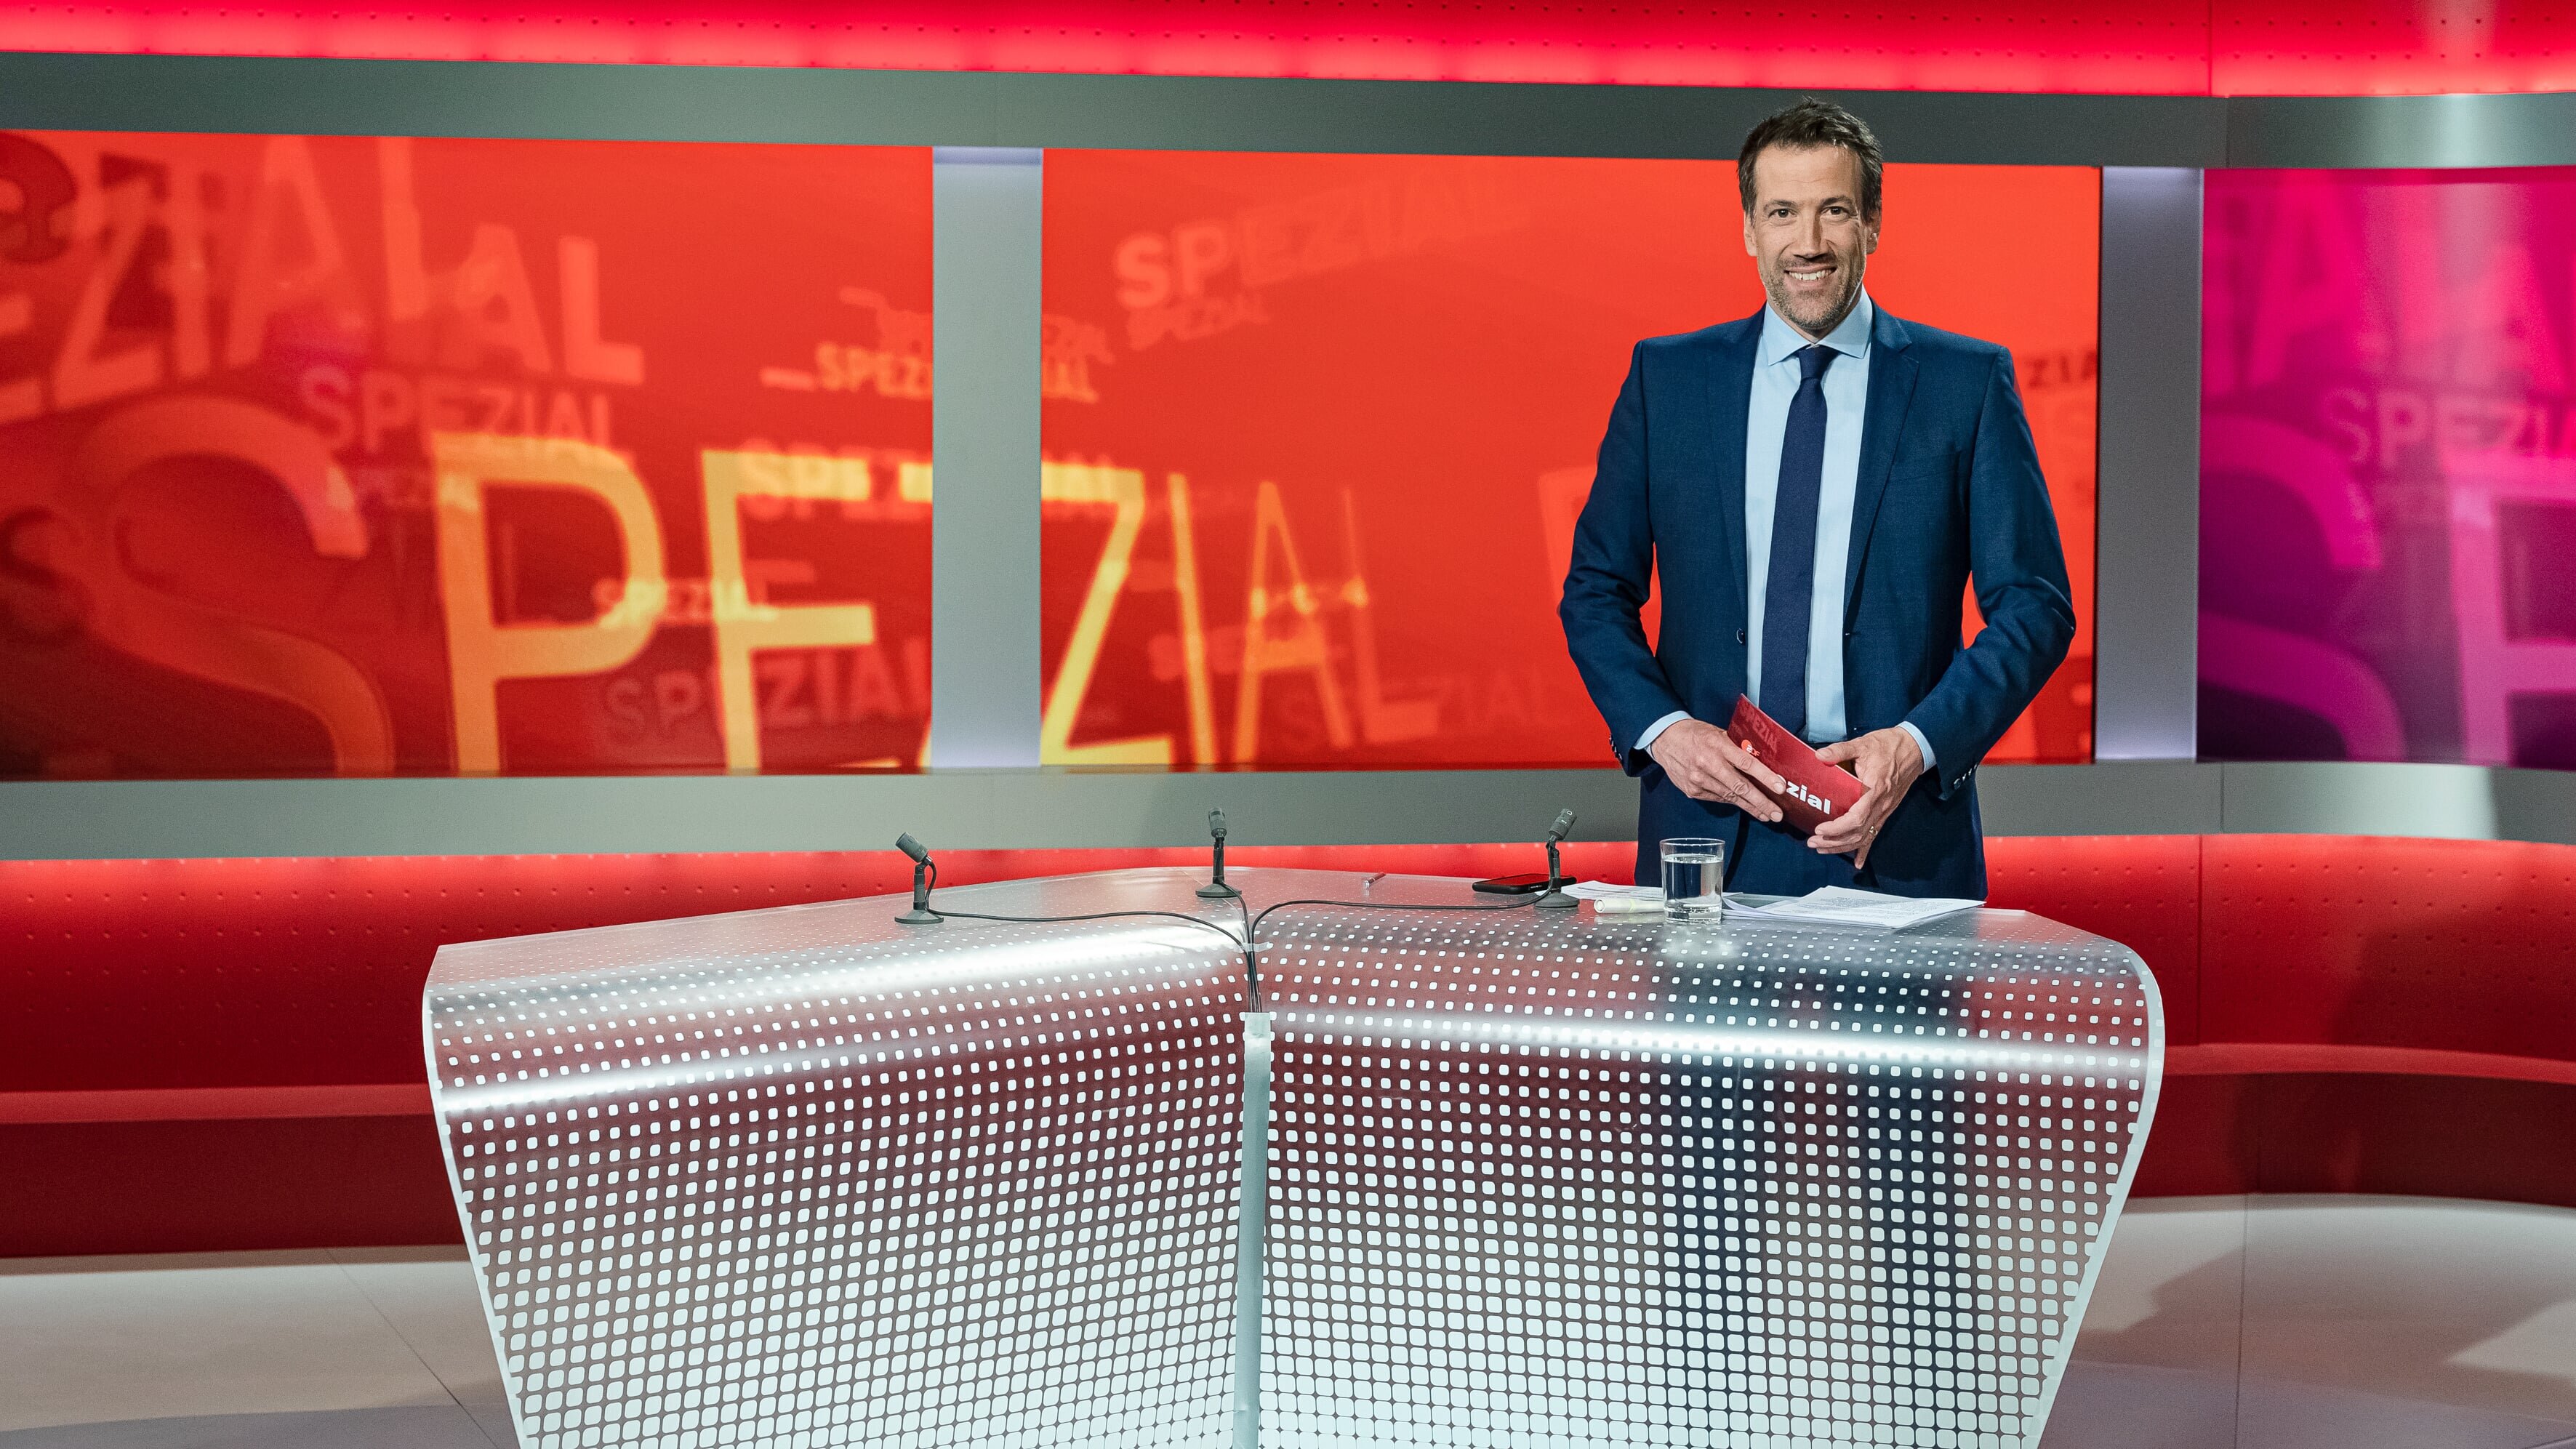 ZDF spezial Dauerregen im Katastrophengebiet – Dramatische Lage in Süddeutschland